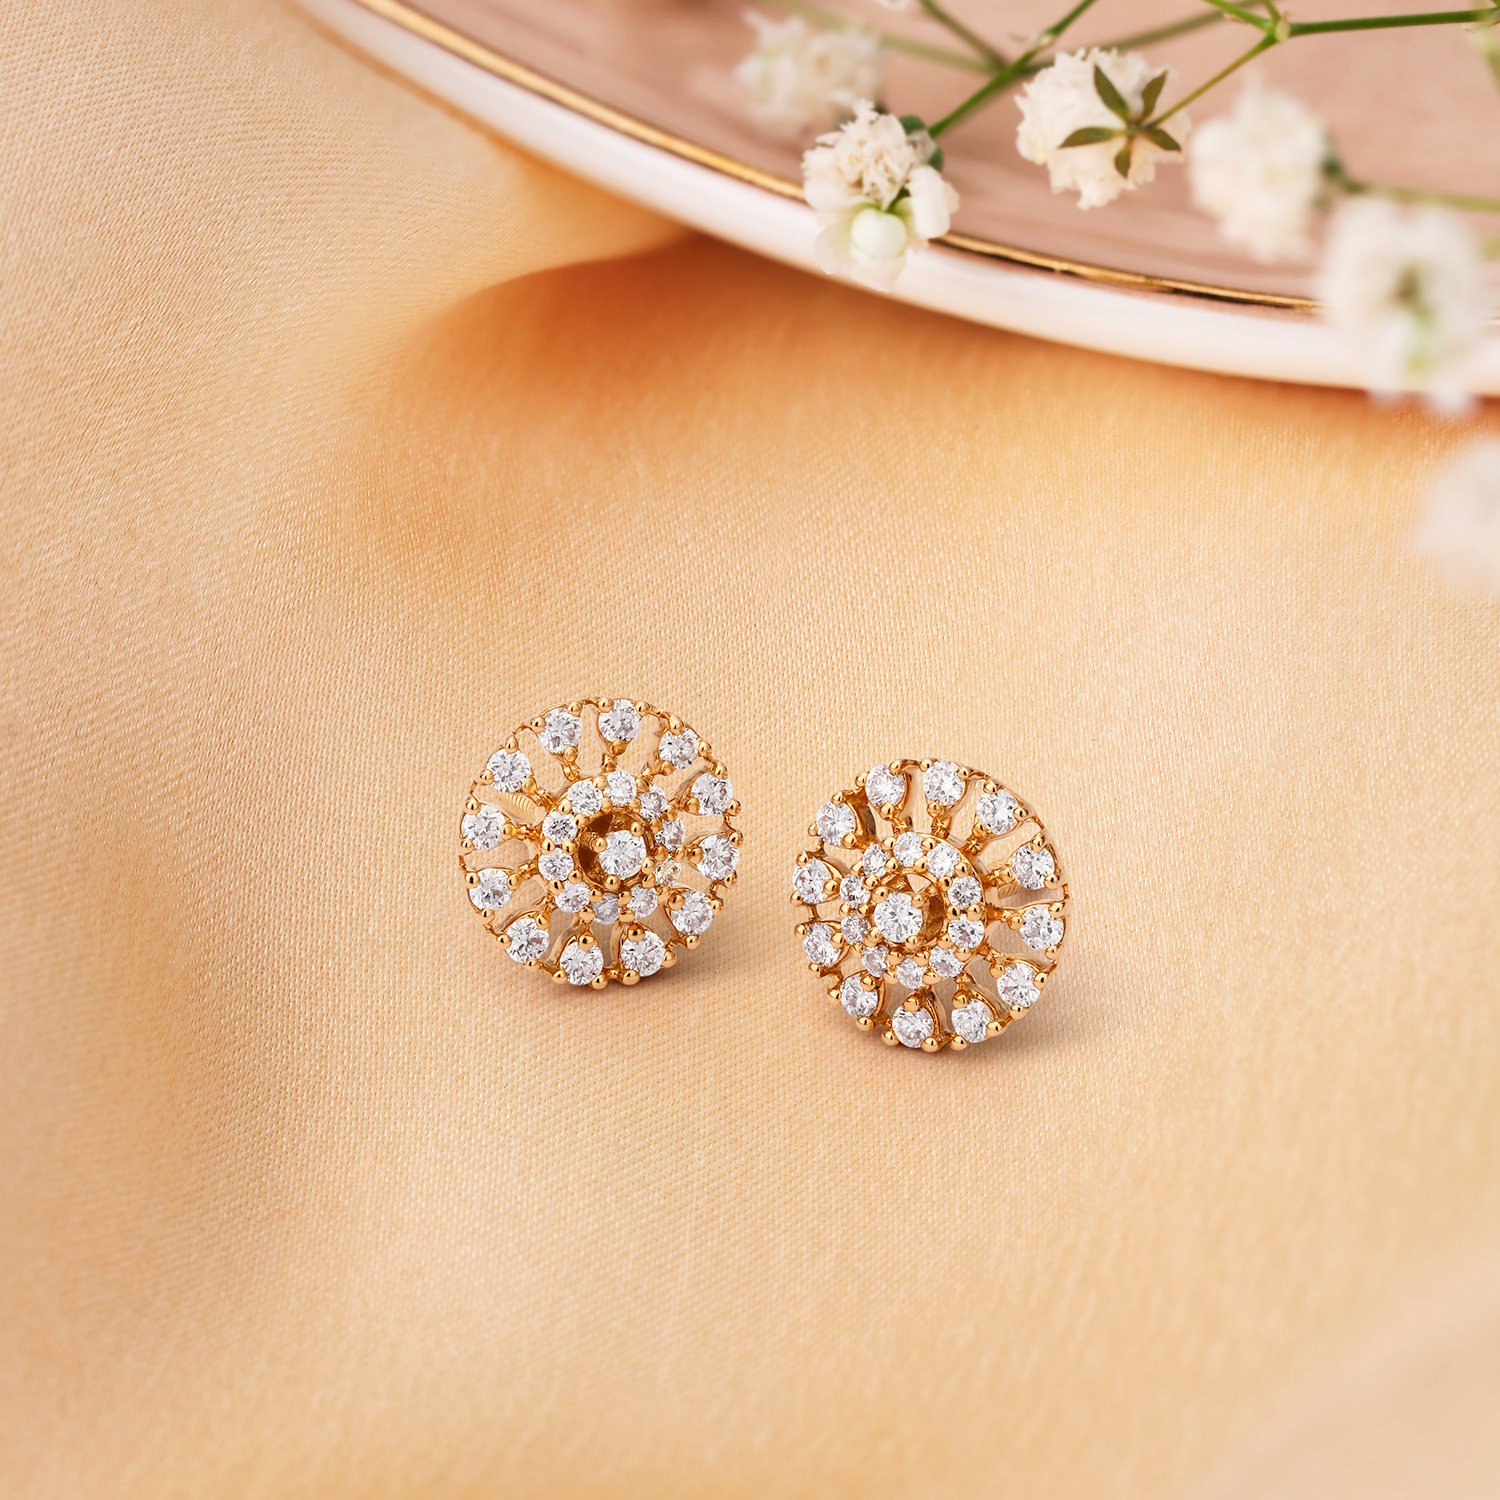 Share more than 77 tops earrings diamond best